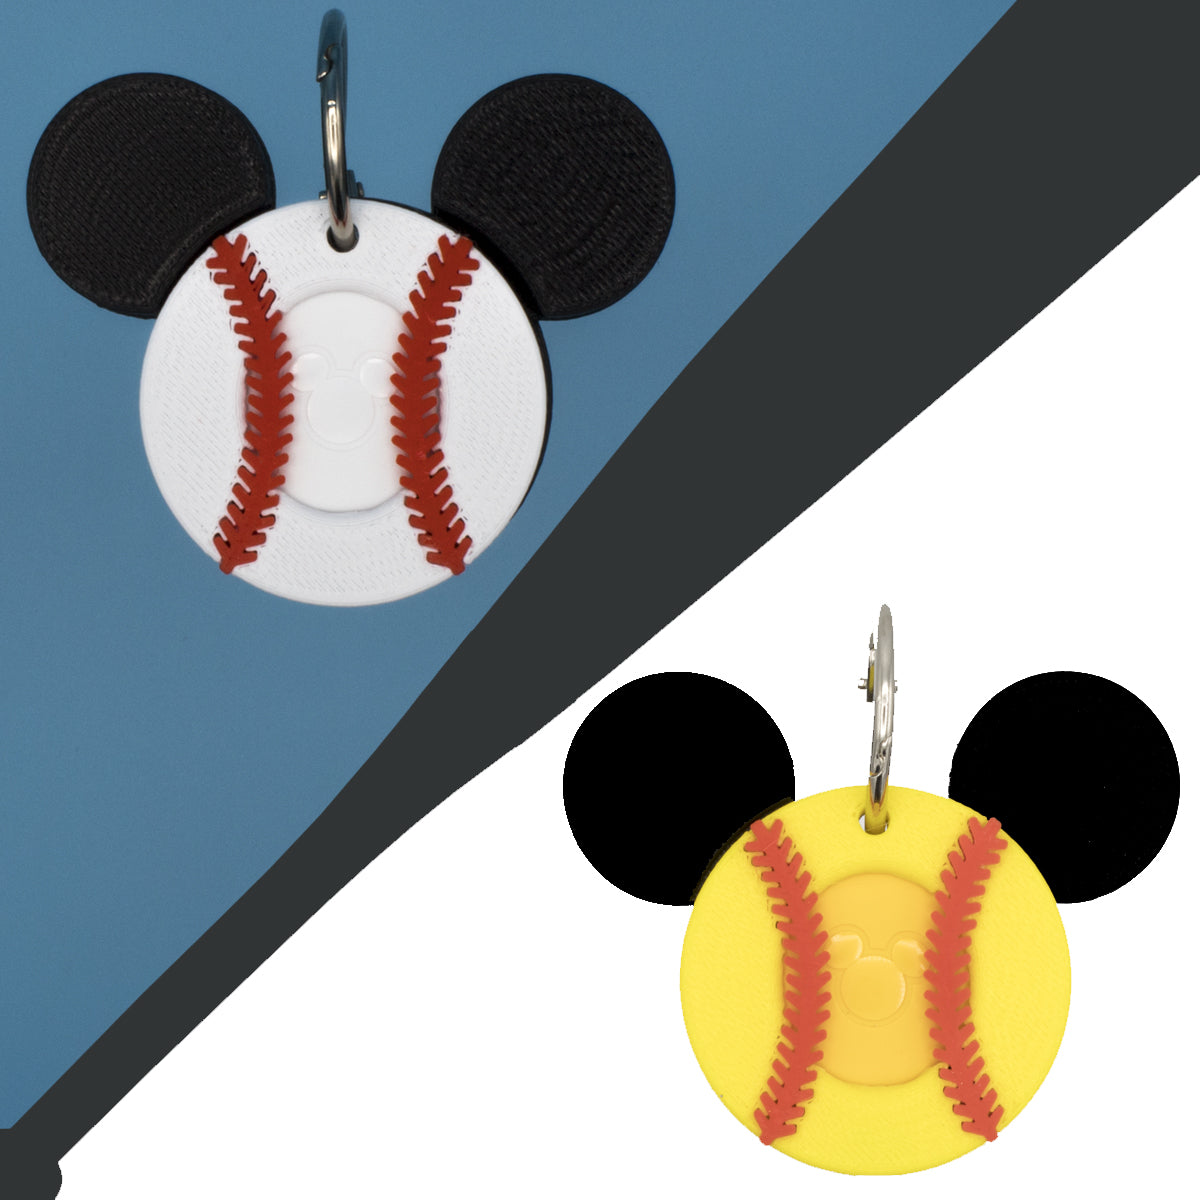 mickey mouse baseball clipart